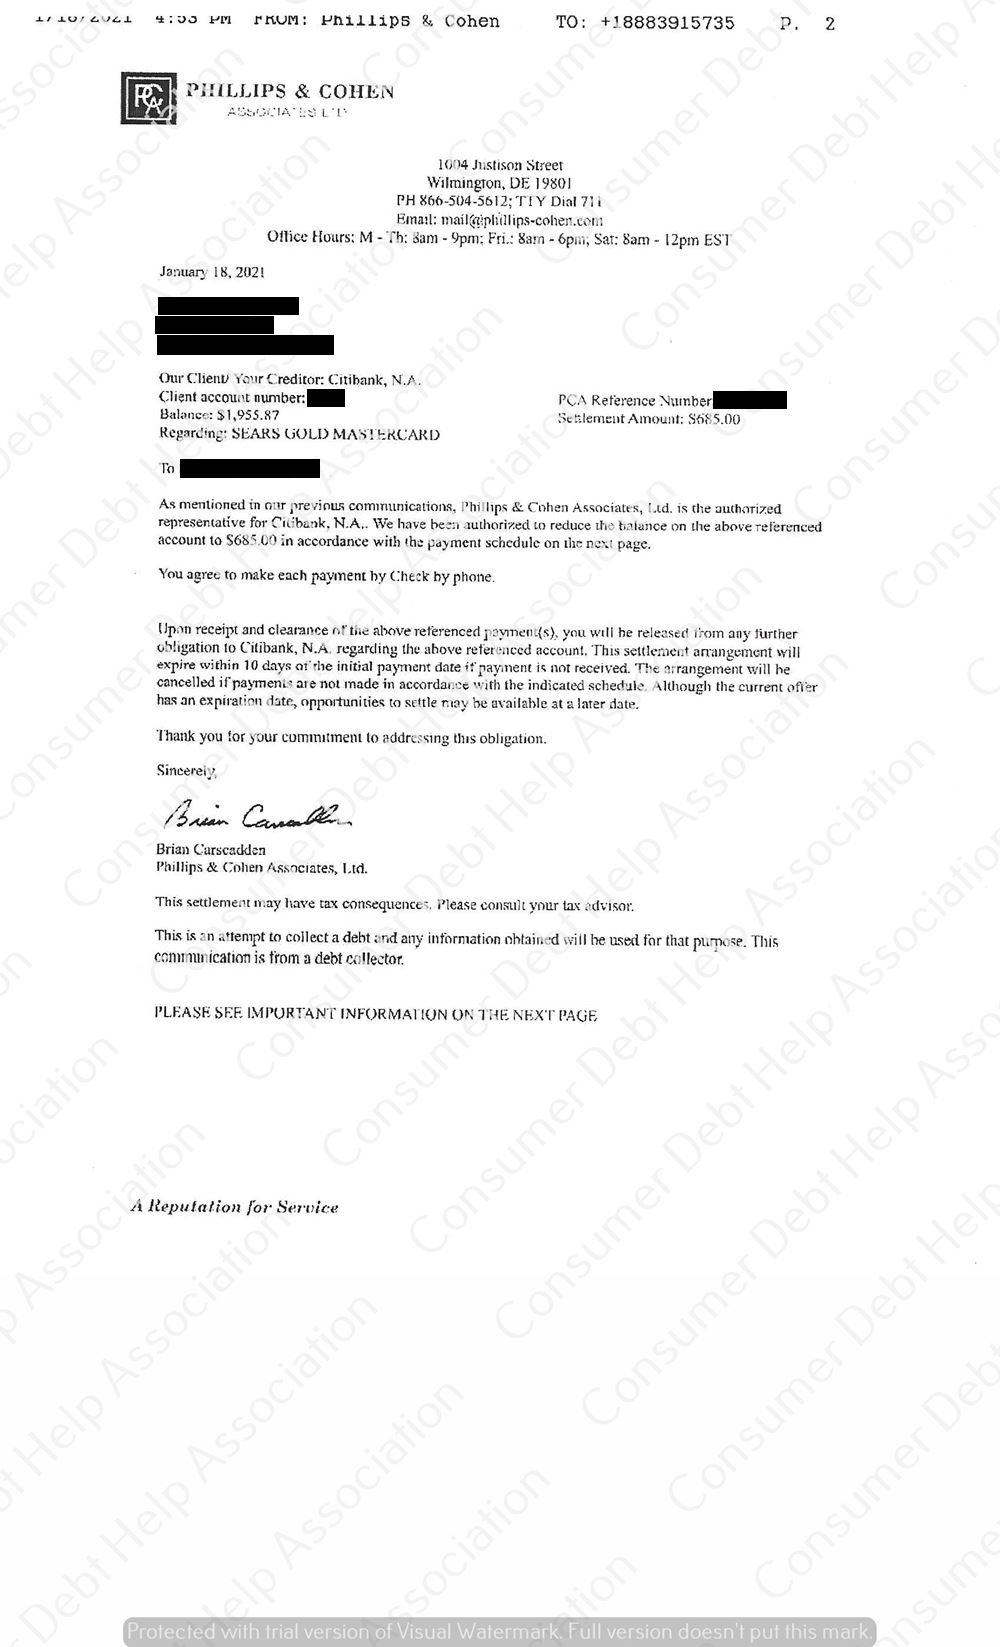 Settlement Letter from Sears/Citibank Consumer DEBT HELP ASSOCIATION